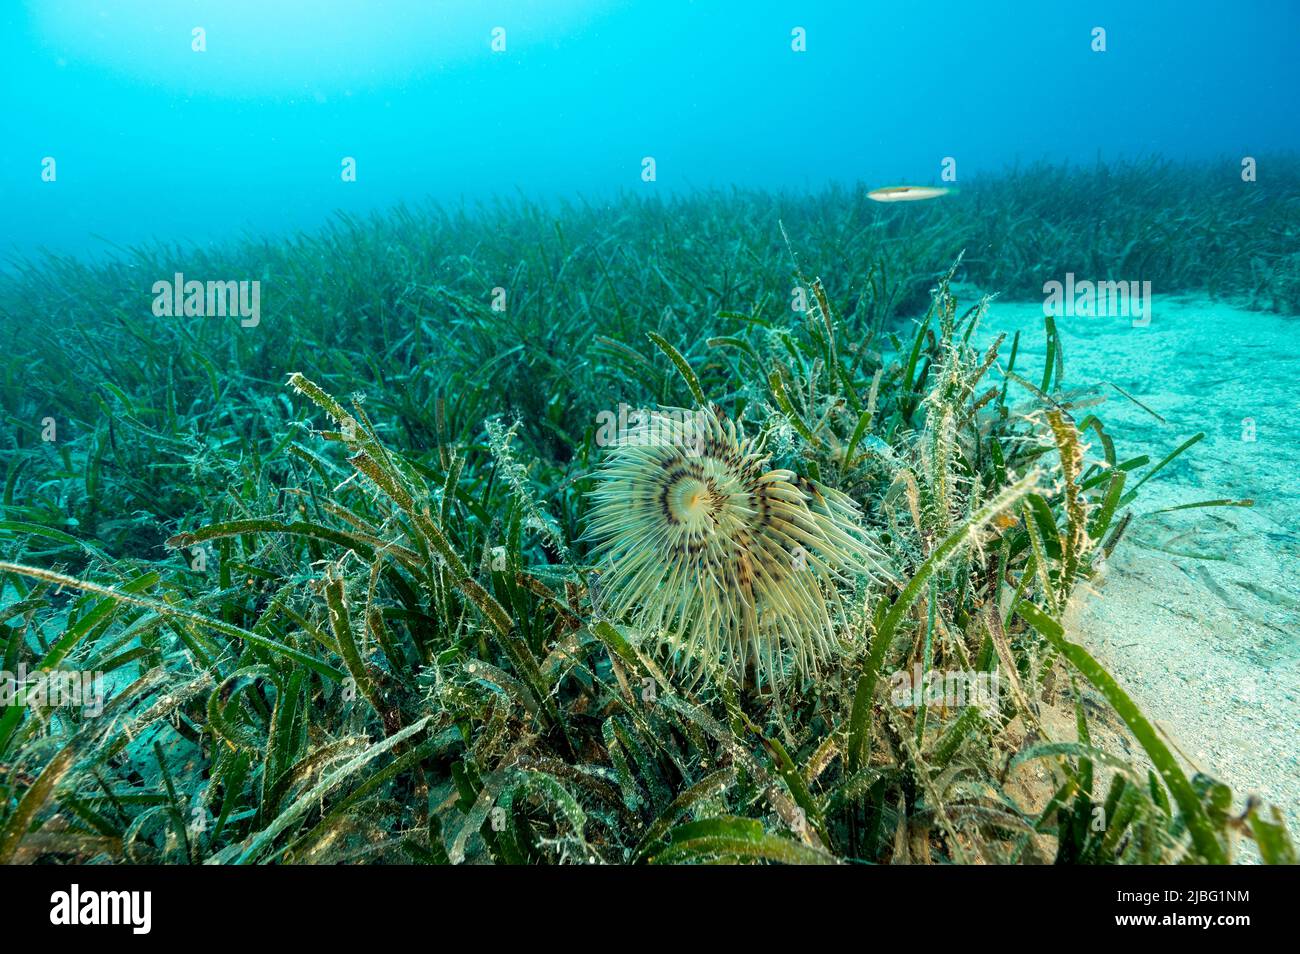 Tube worm, Sabella spallanzanii, in Neptune sea grass bed, Gokova Turkey. Stock Photo